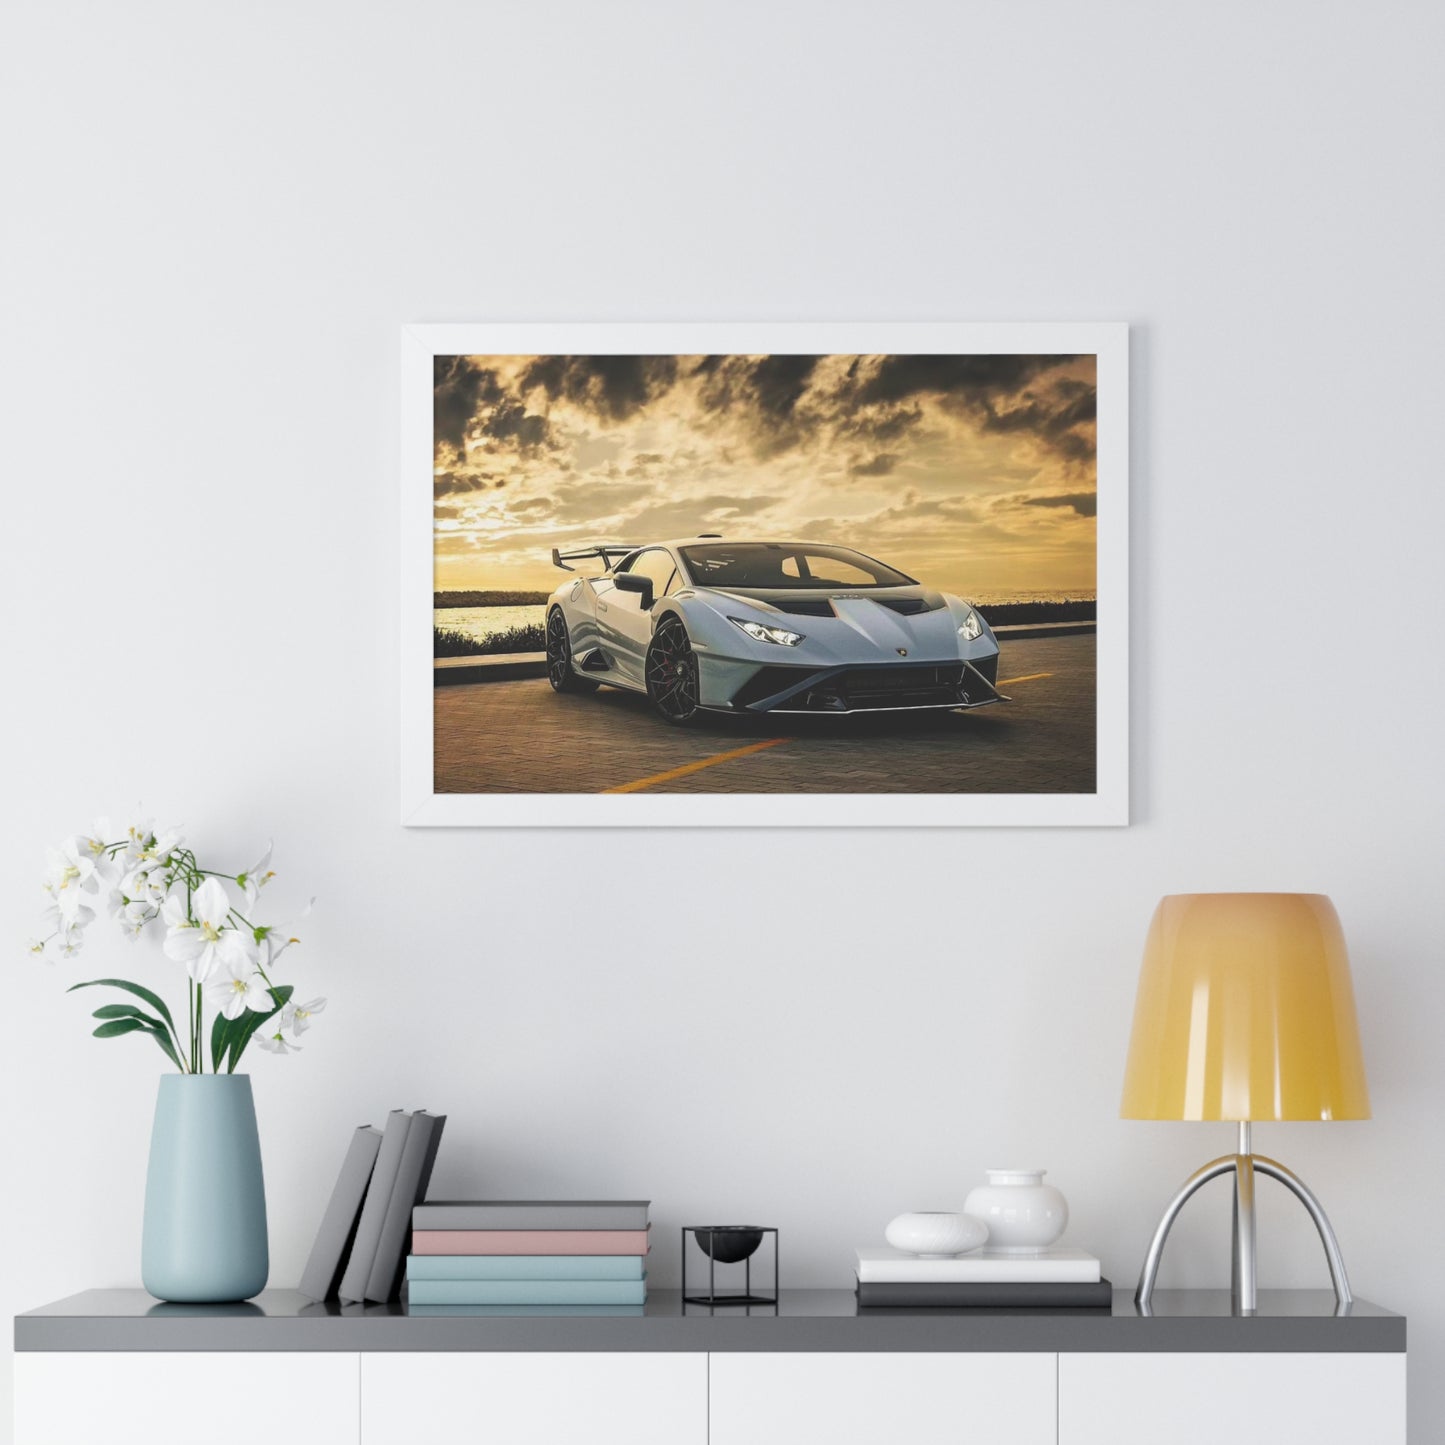 "Cloudy Skies" 30" x 20" Framed Lamborghini Poster